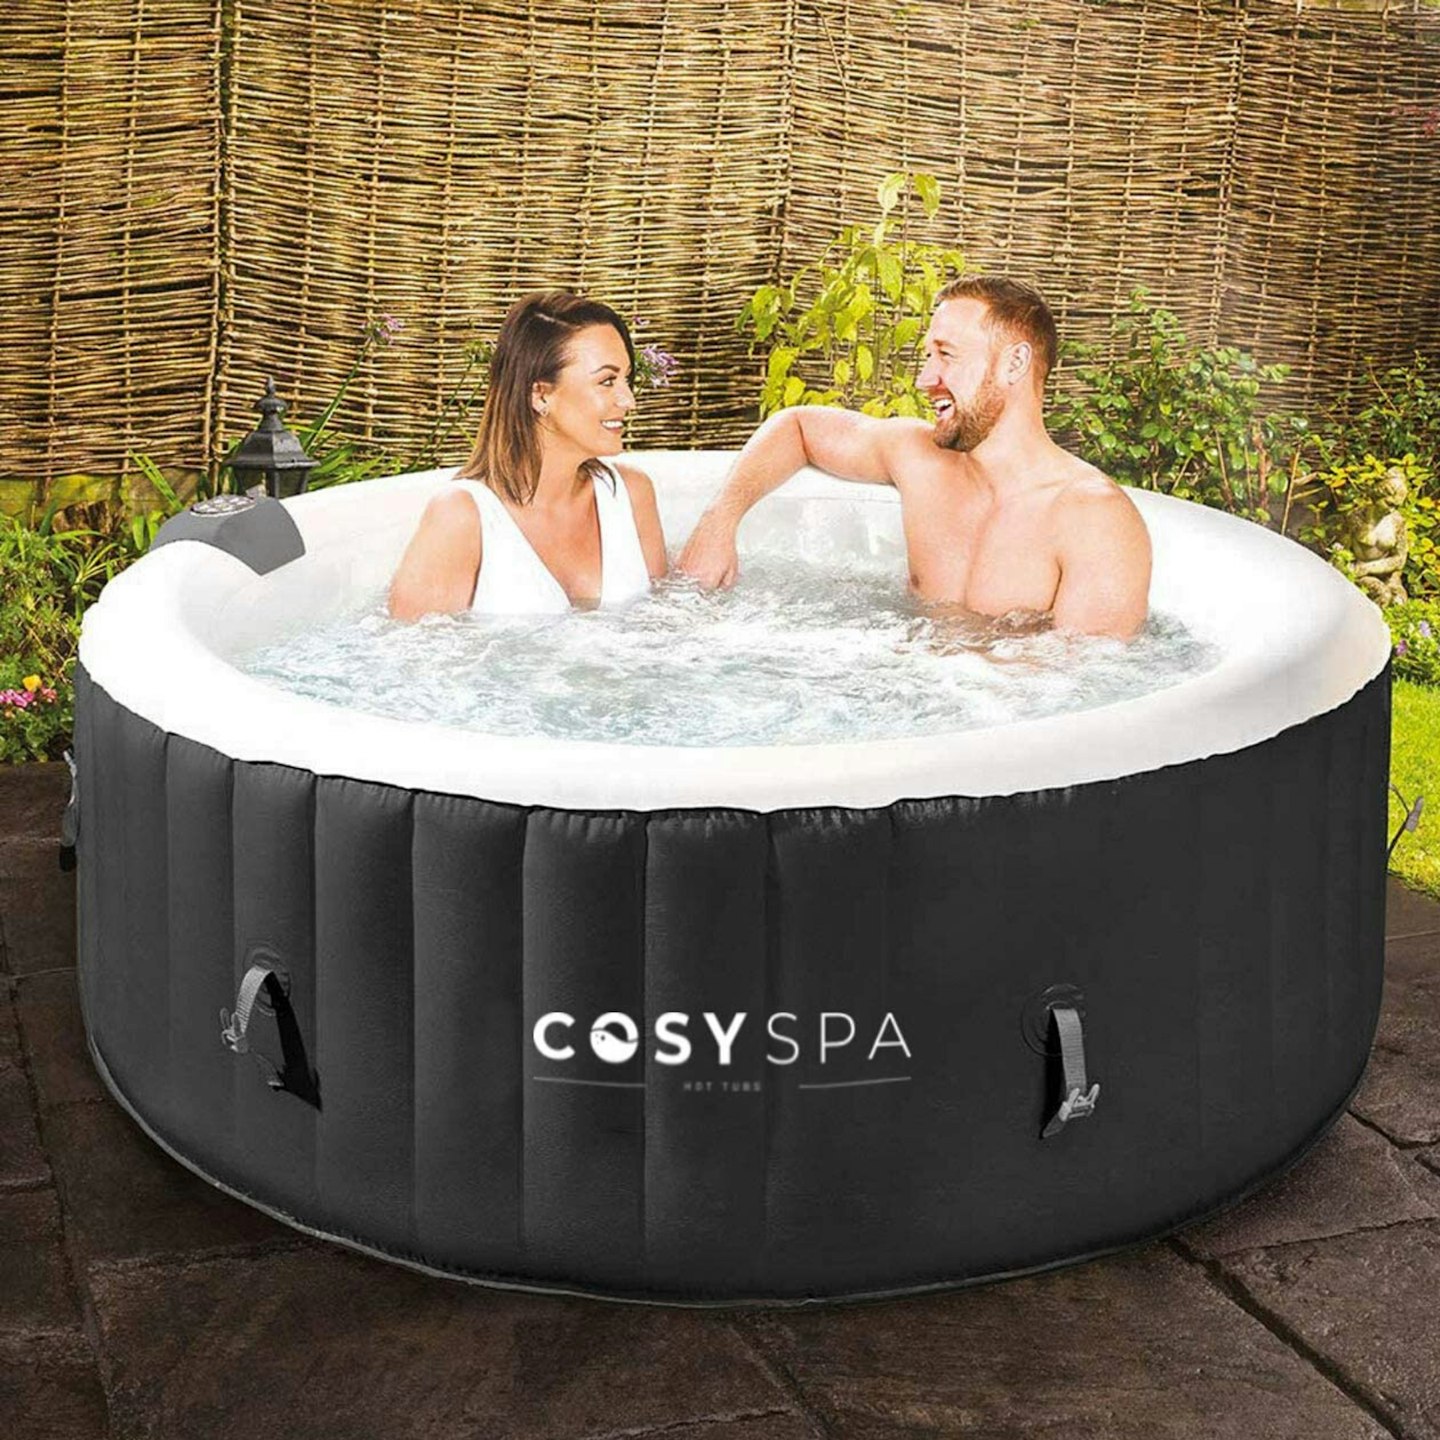 CosySpa Inflatable Hot Tub Sp